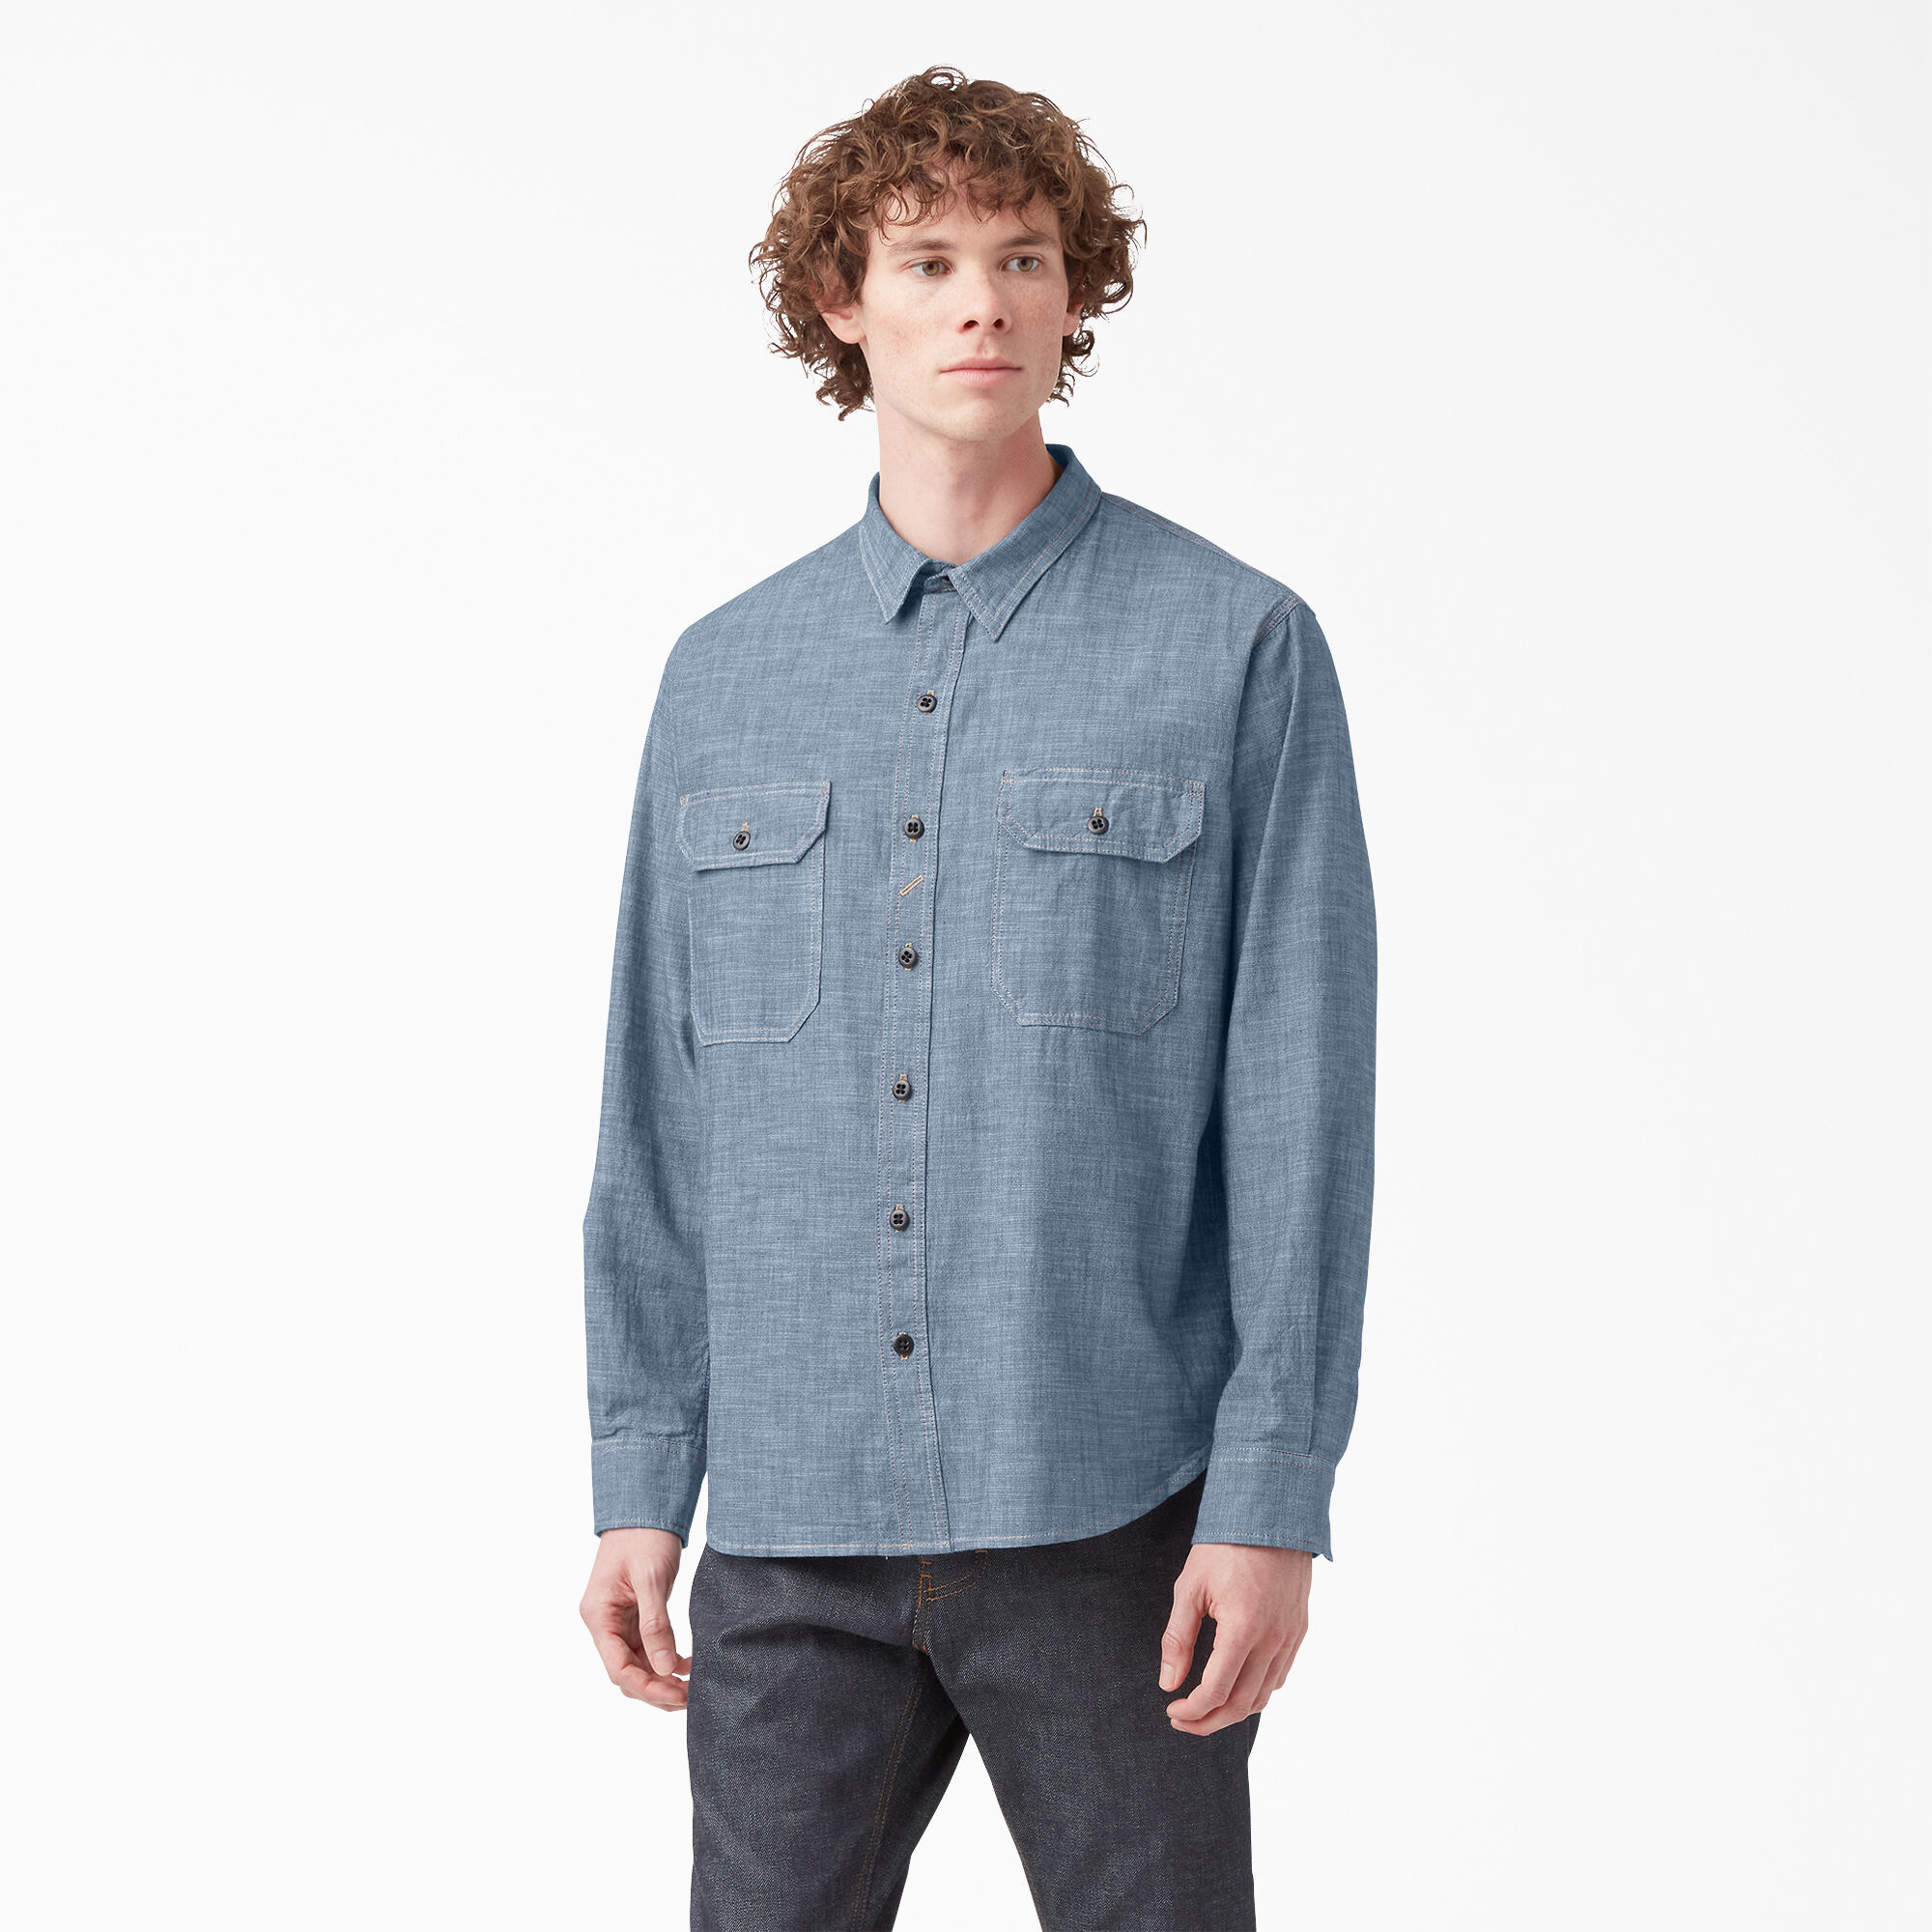 Men's Work Shirts - Button Up Workwear Shirts | Dickies